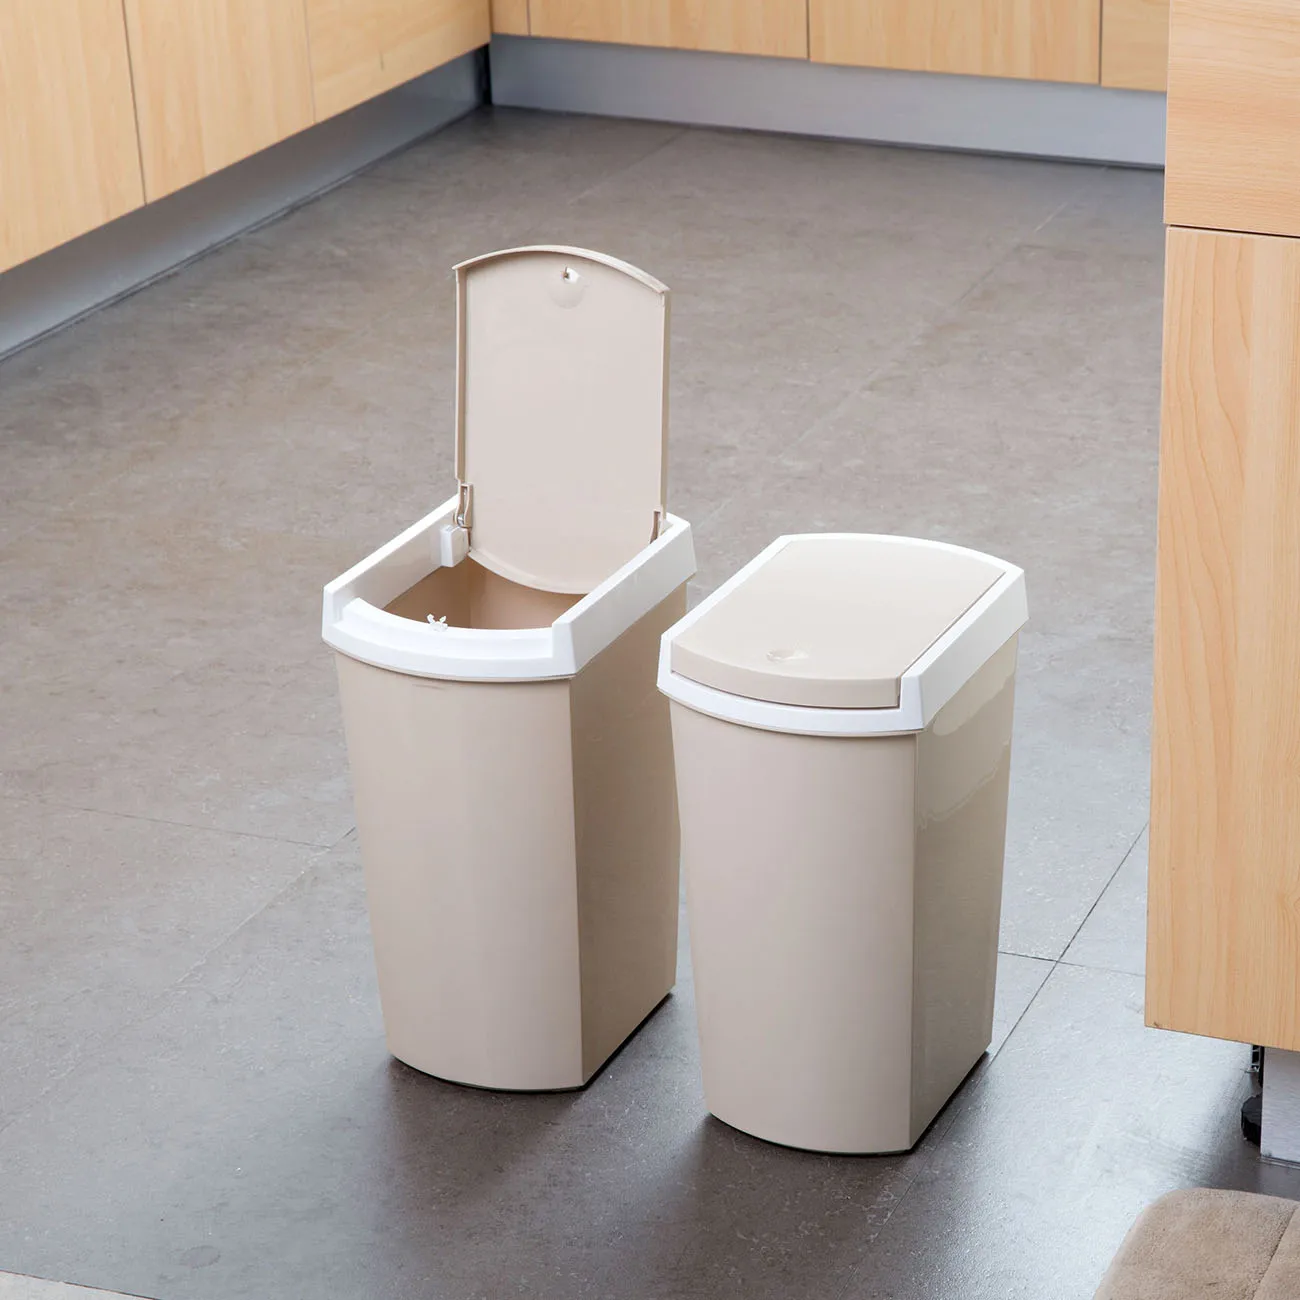 OTHERHOUSE большой размер мусорное ведро тип штампованной детали мусорное ведро пластиковый контейнер для мусора мусорная корзина кухня ванная комната Гостиная мусорное ведро